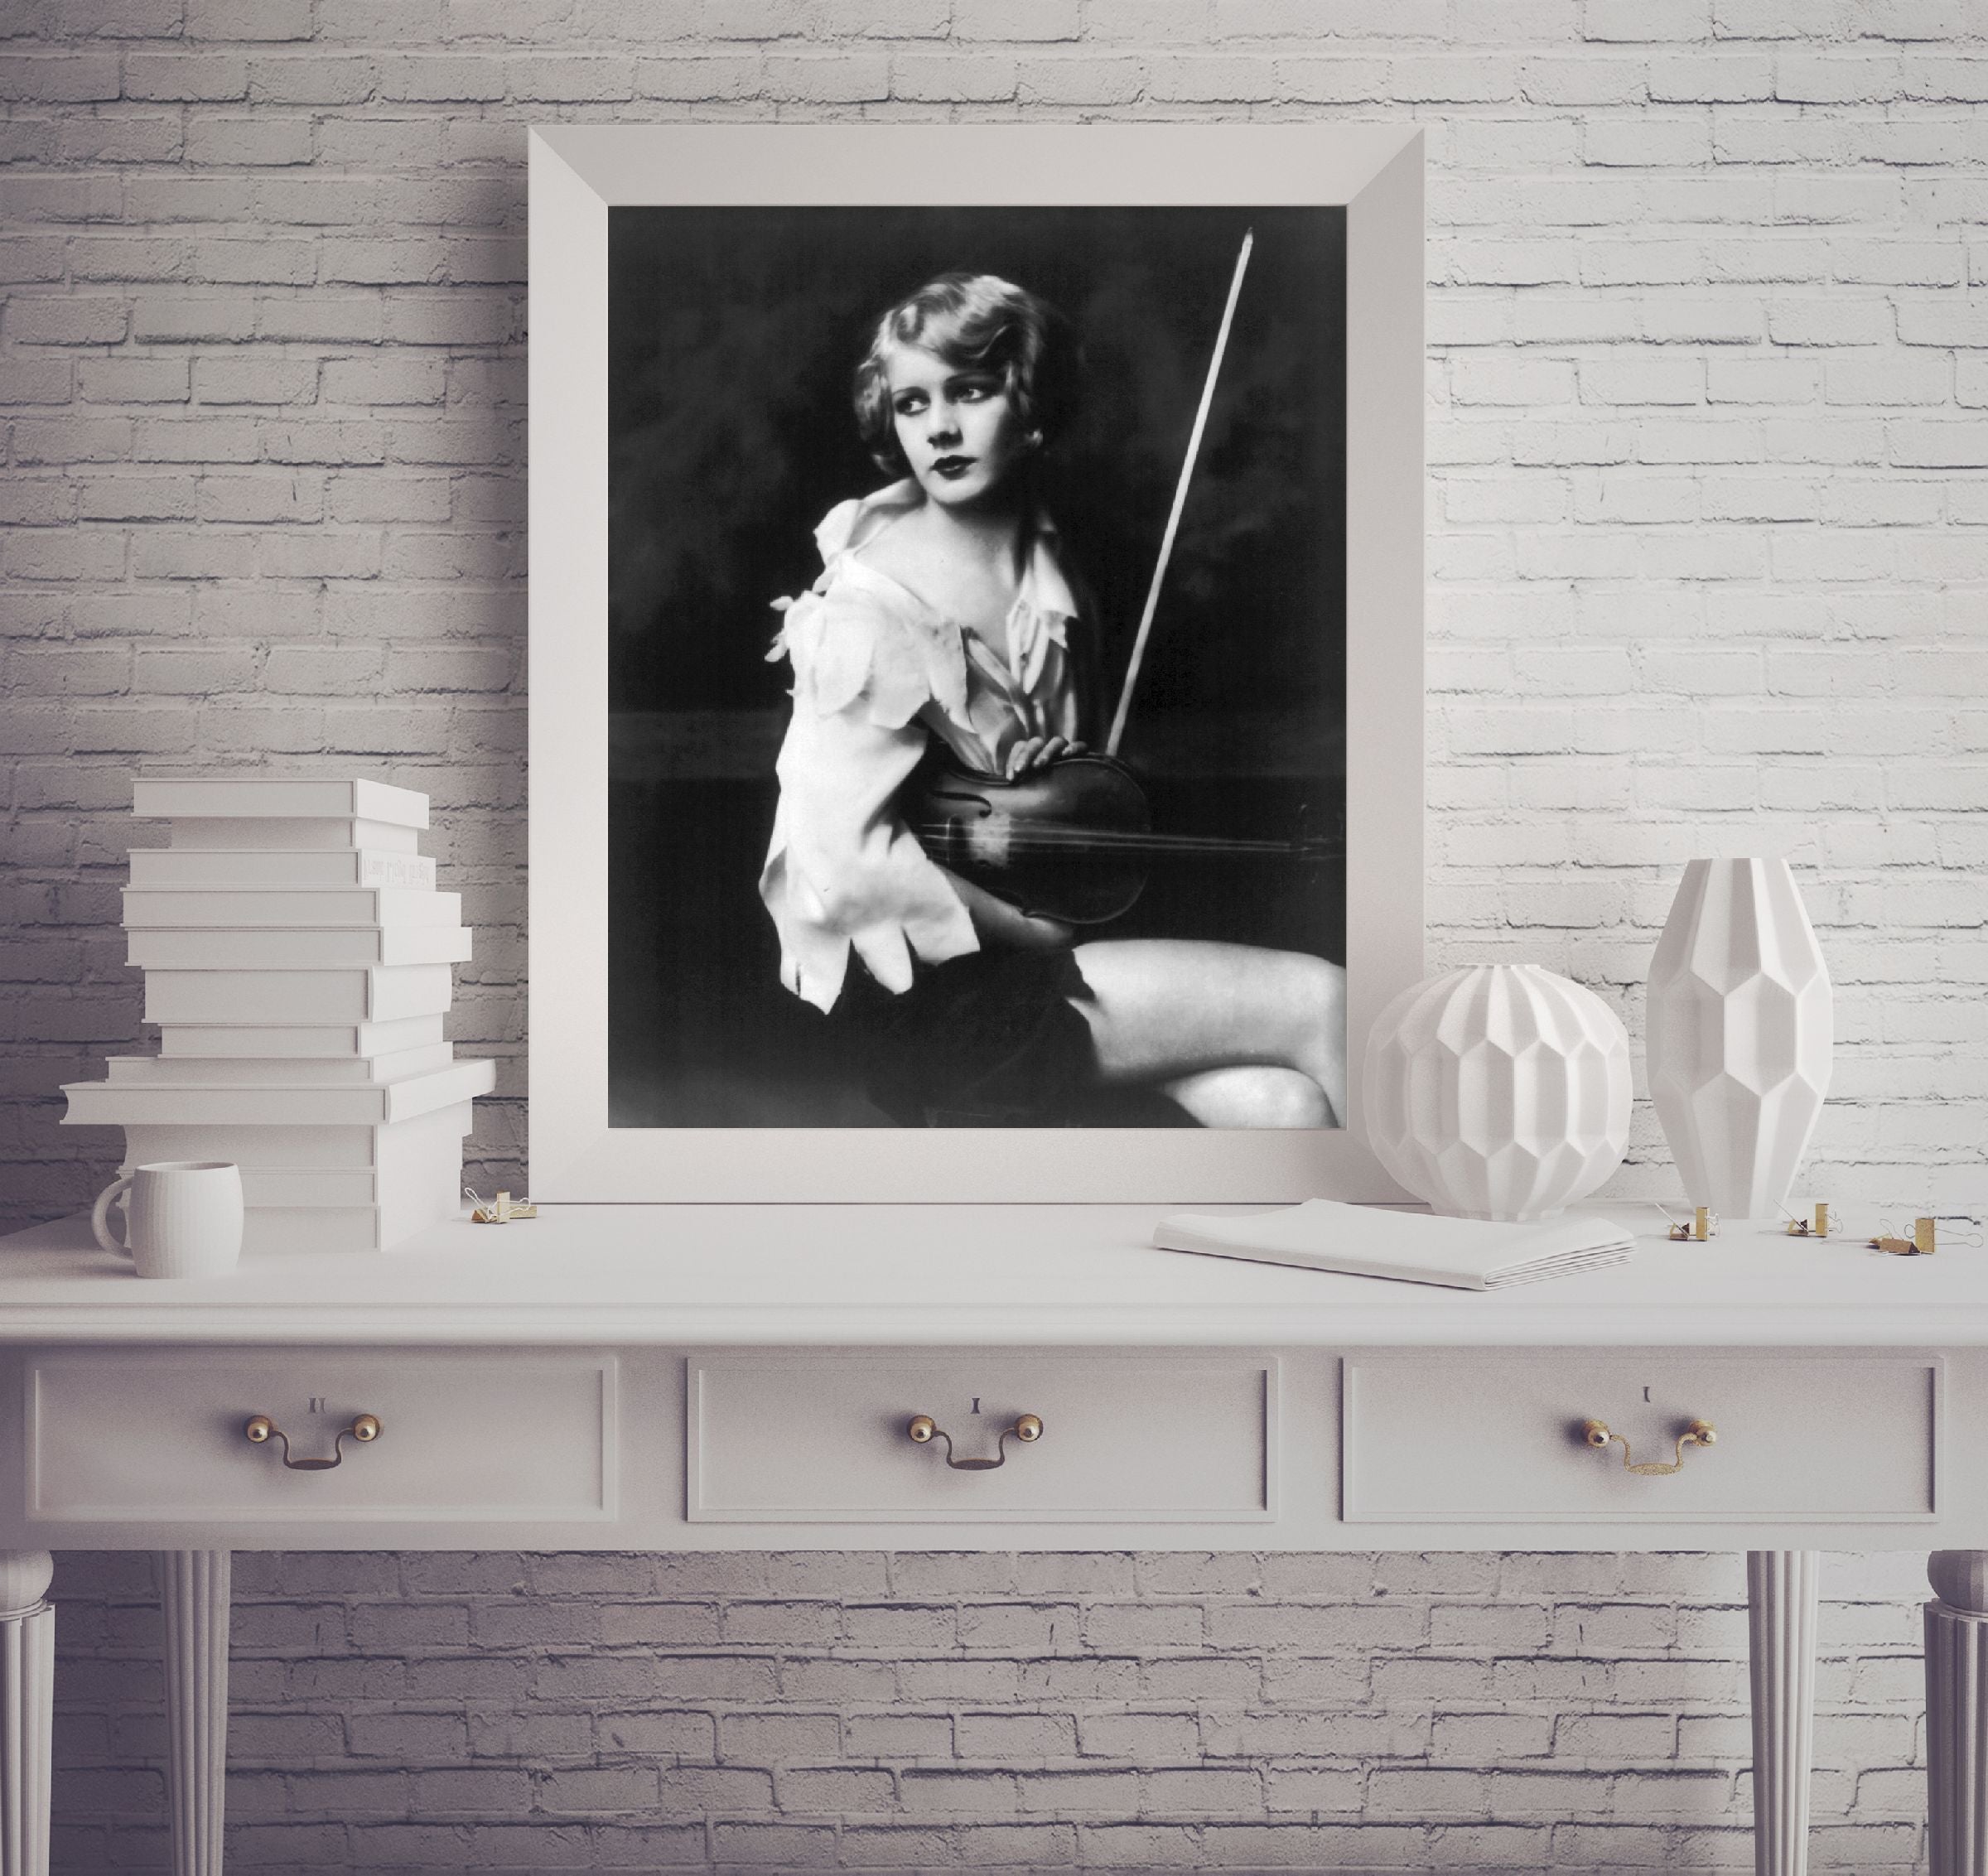 Photo: Kay English, Ziegfeld Girl, violin